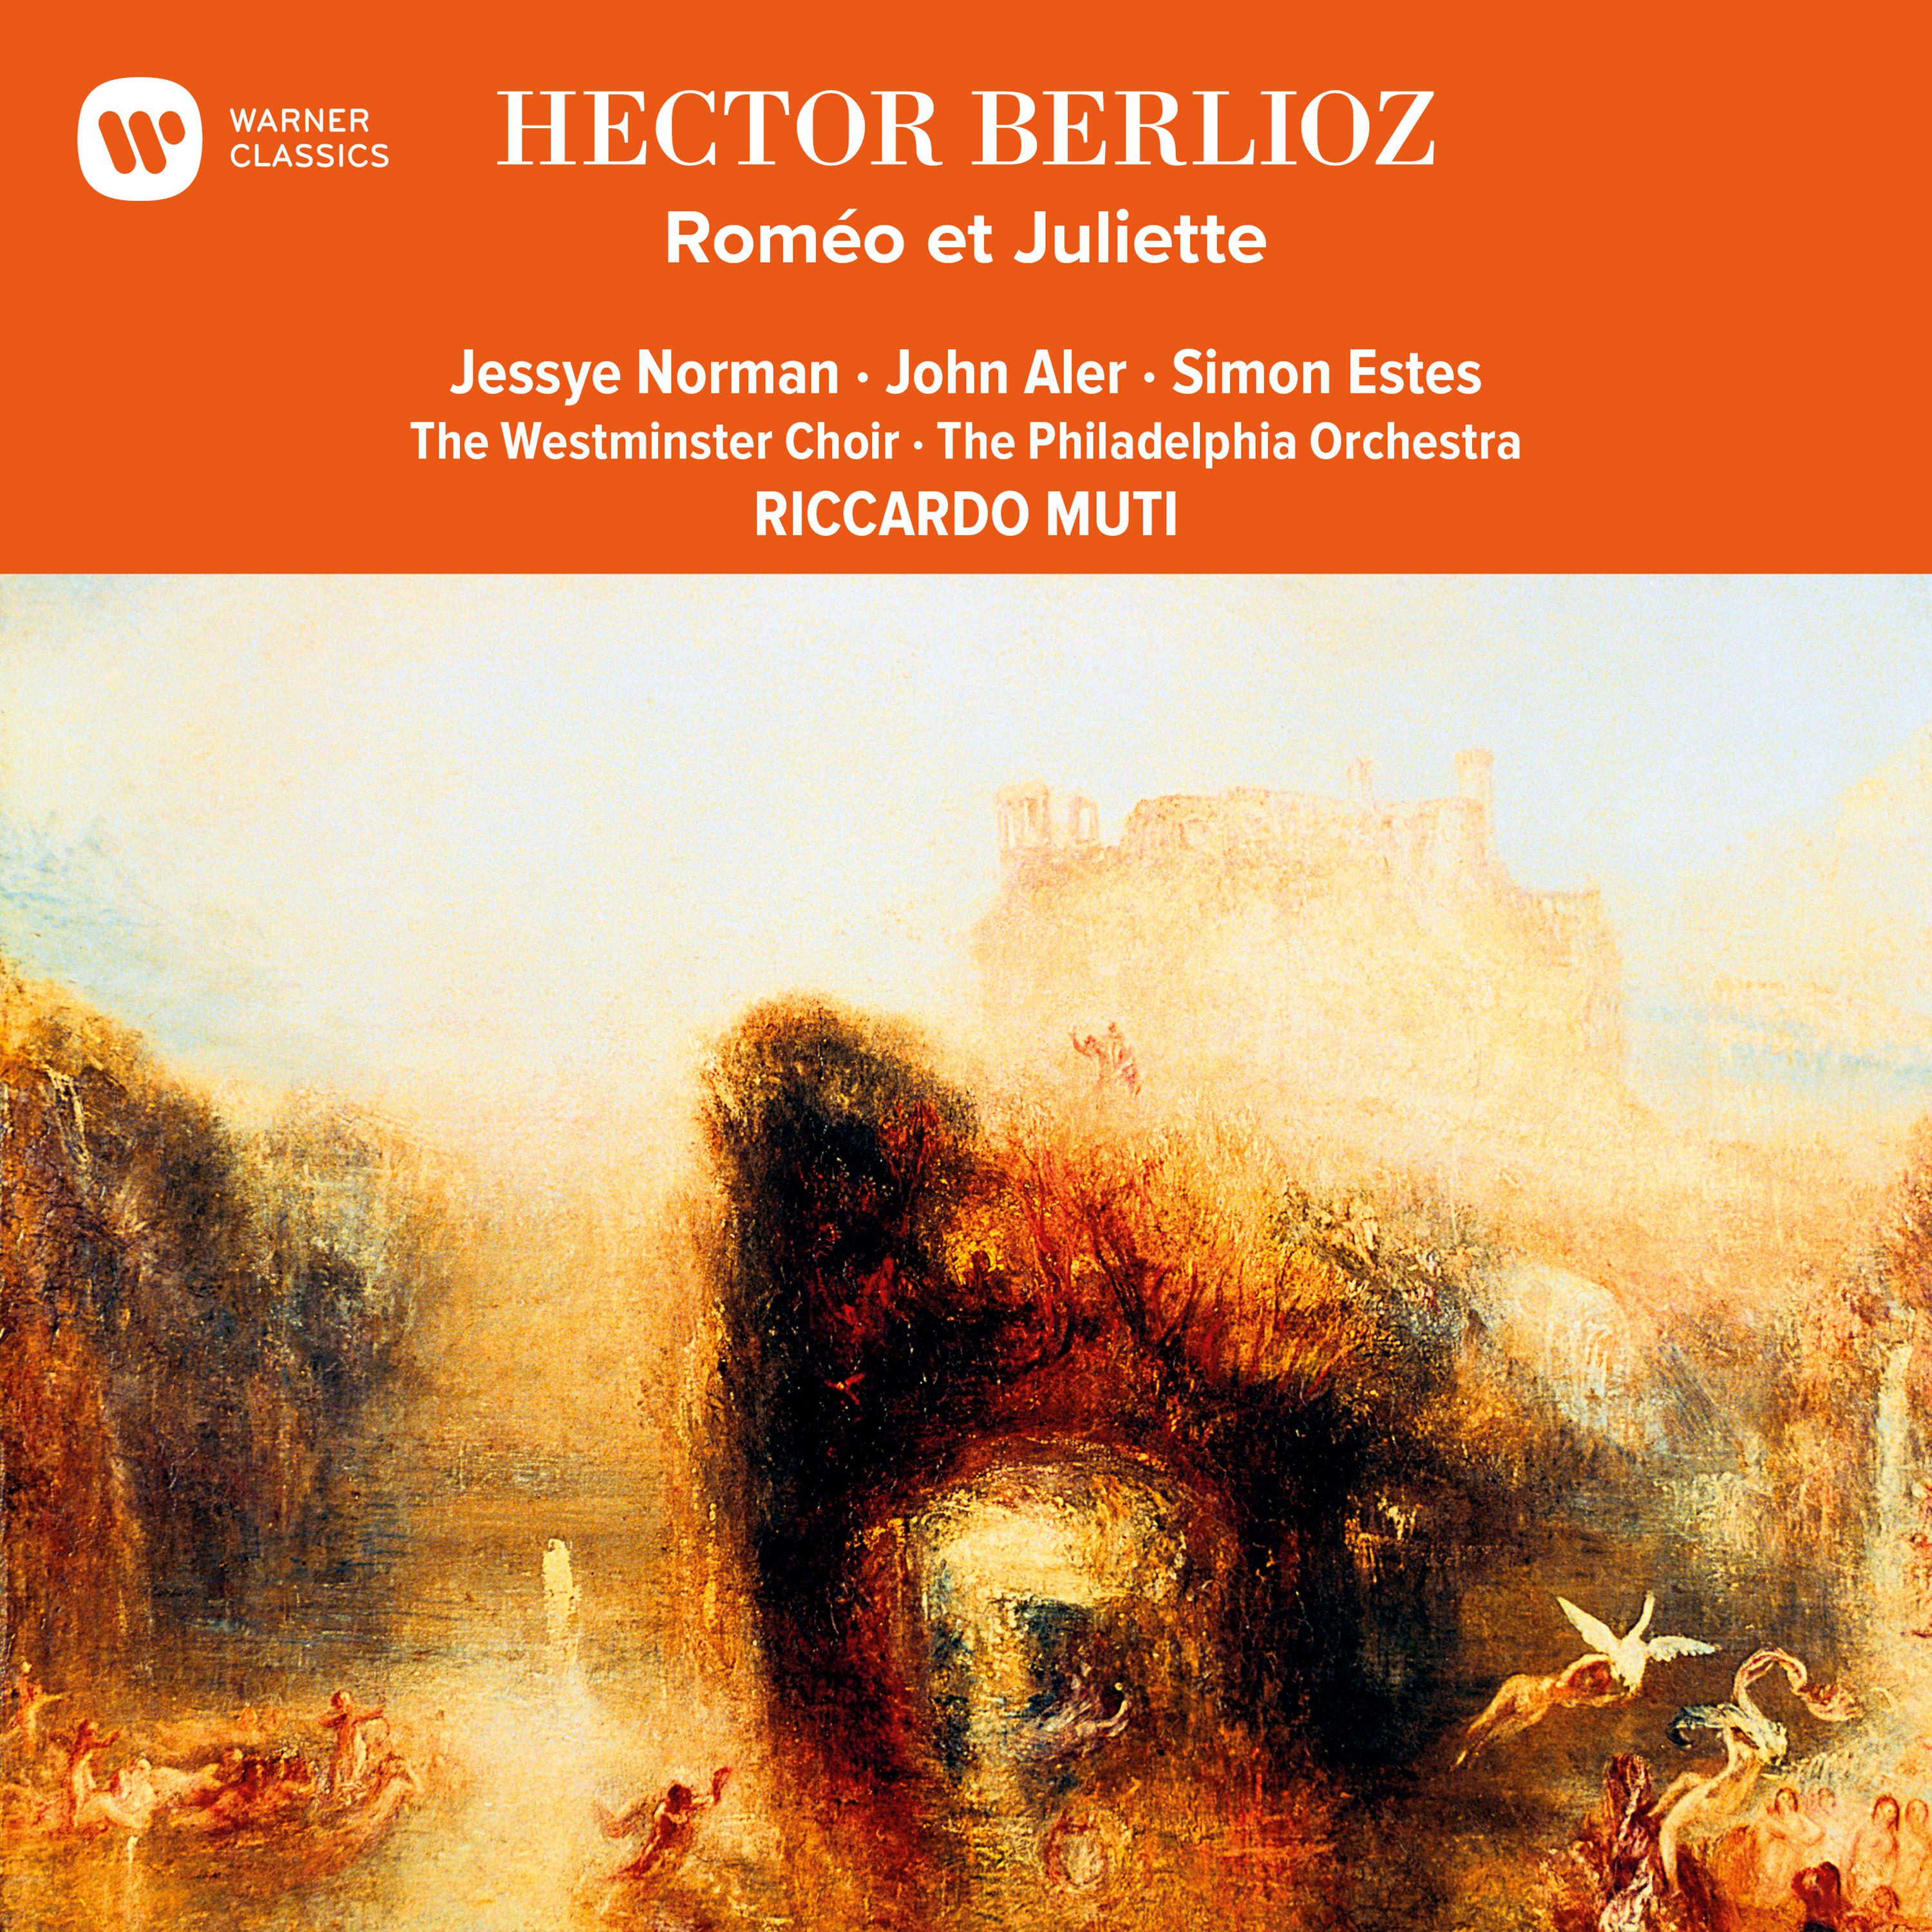 Berlioz: Rome o et Juliette